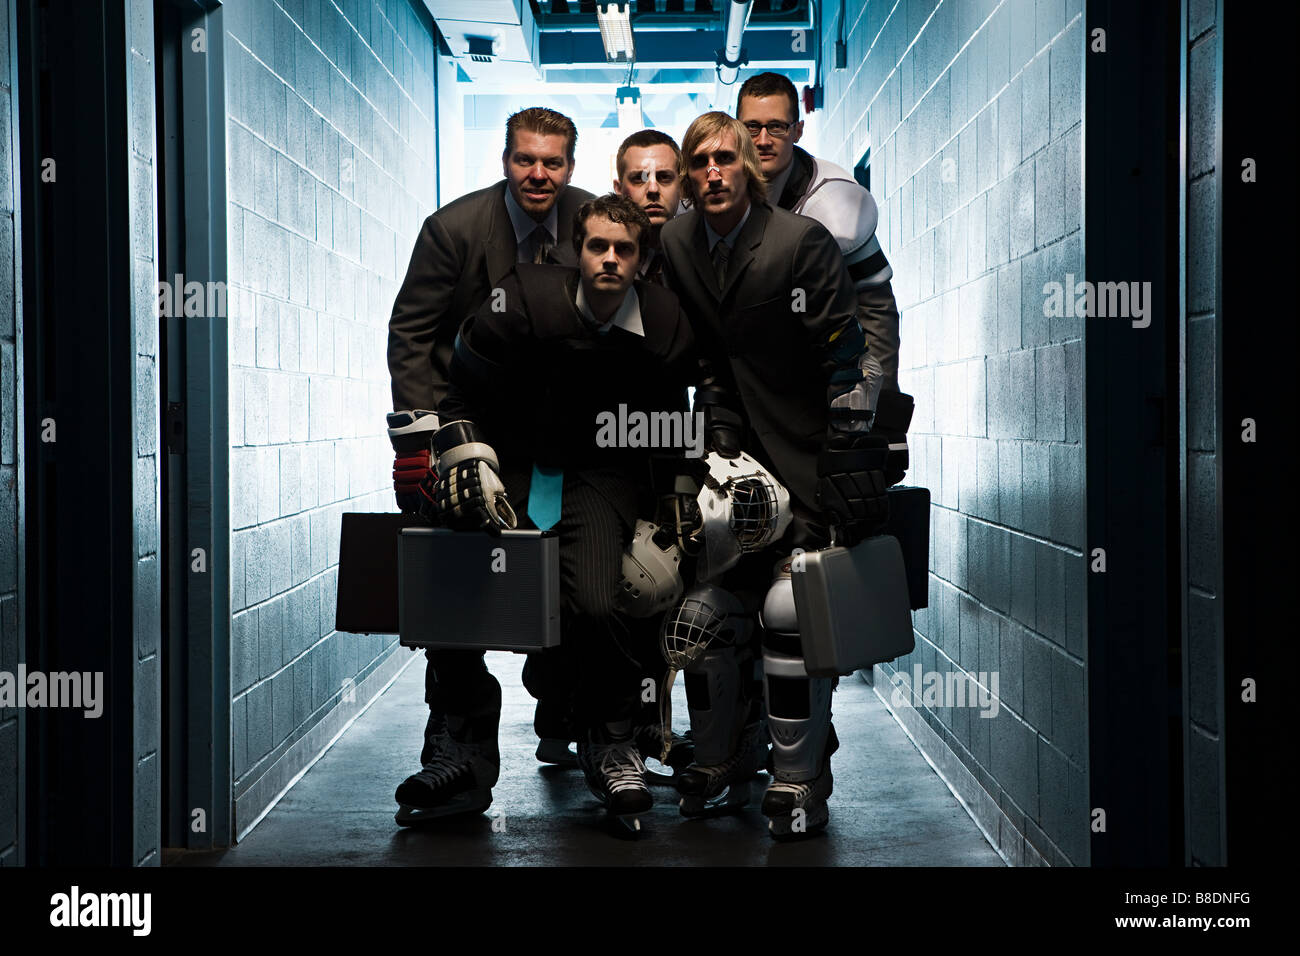 Five businessmen wearing ice hockey uniforms Stock Photo